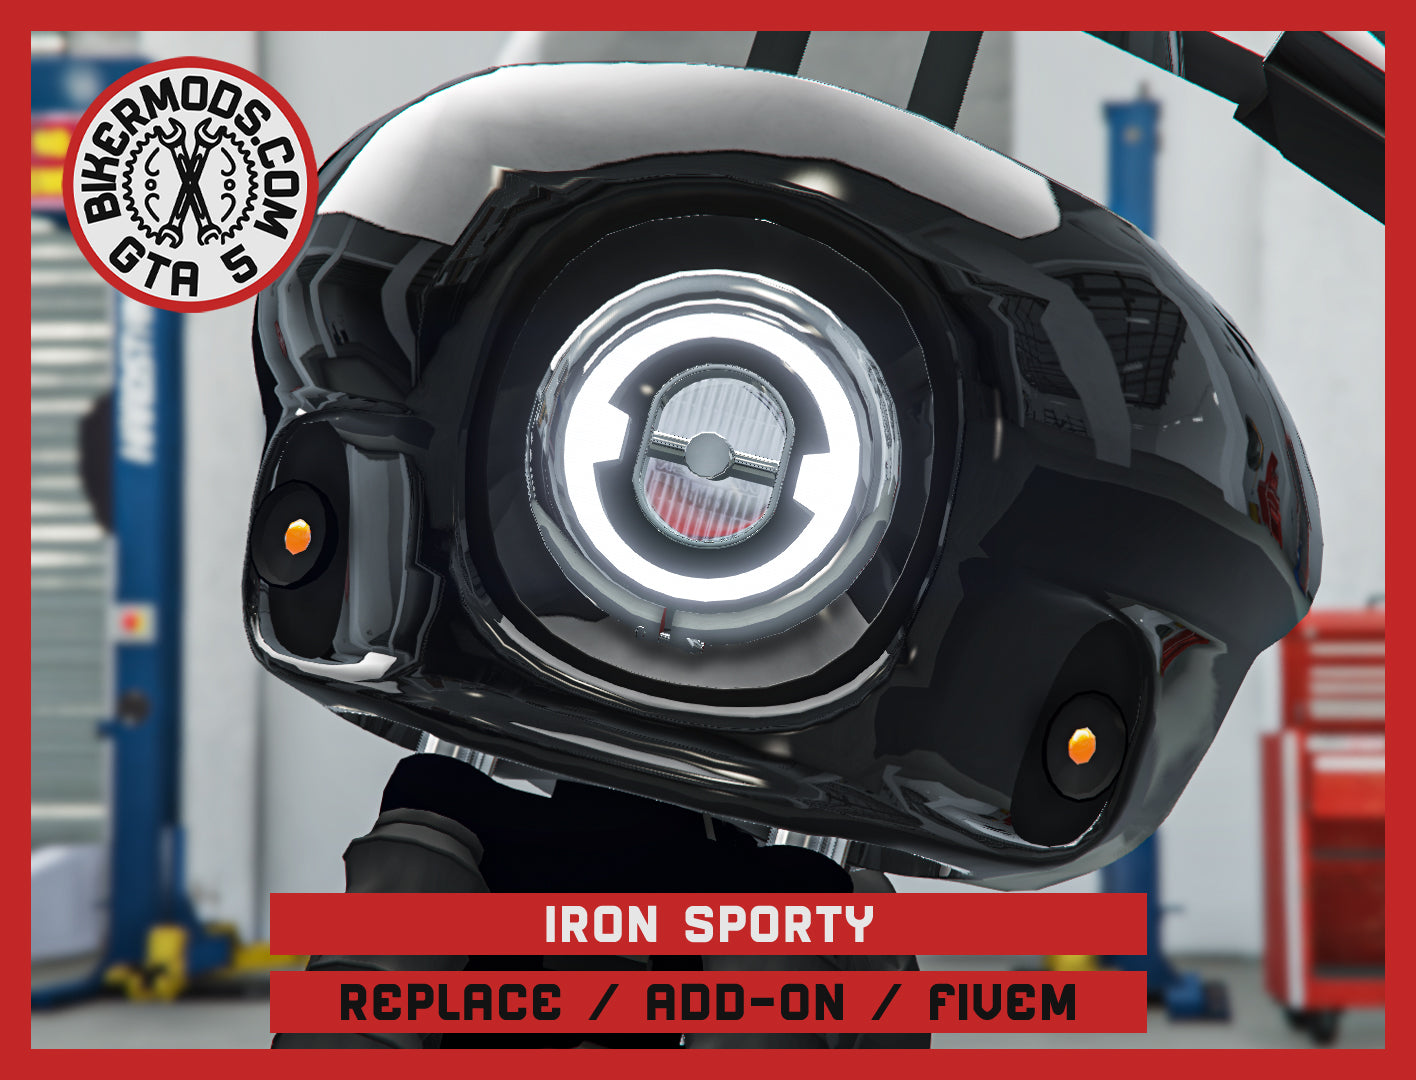 Iron Sporty (Replace / Add On / FiveM) 182k Poly